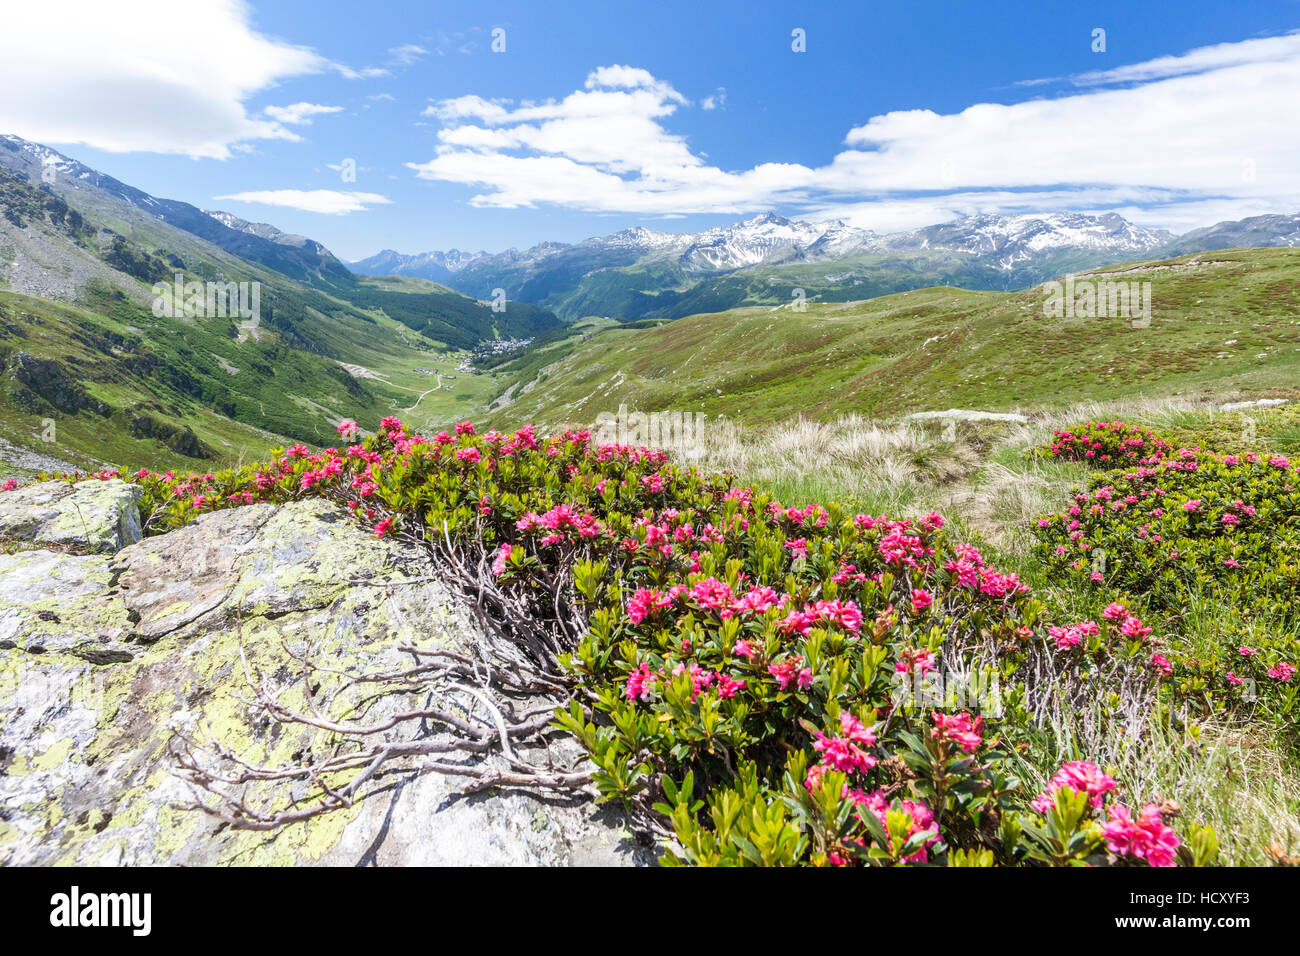 La trame des rhododendrons paysage alpin vert, Montespluga, Chiavenna, vallée de la Valteline, province Sondrio, Lombardie, Italie Banque D'Images